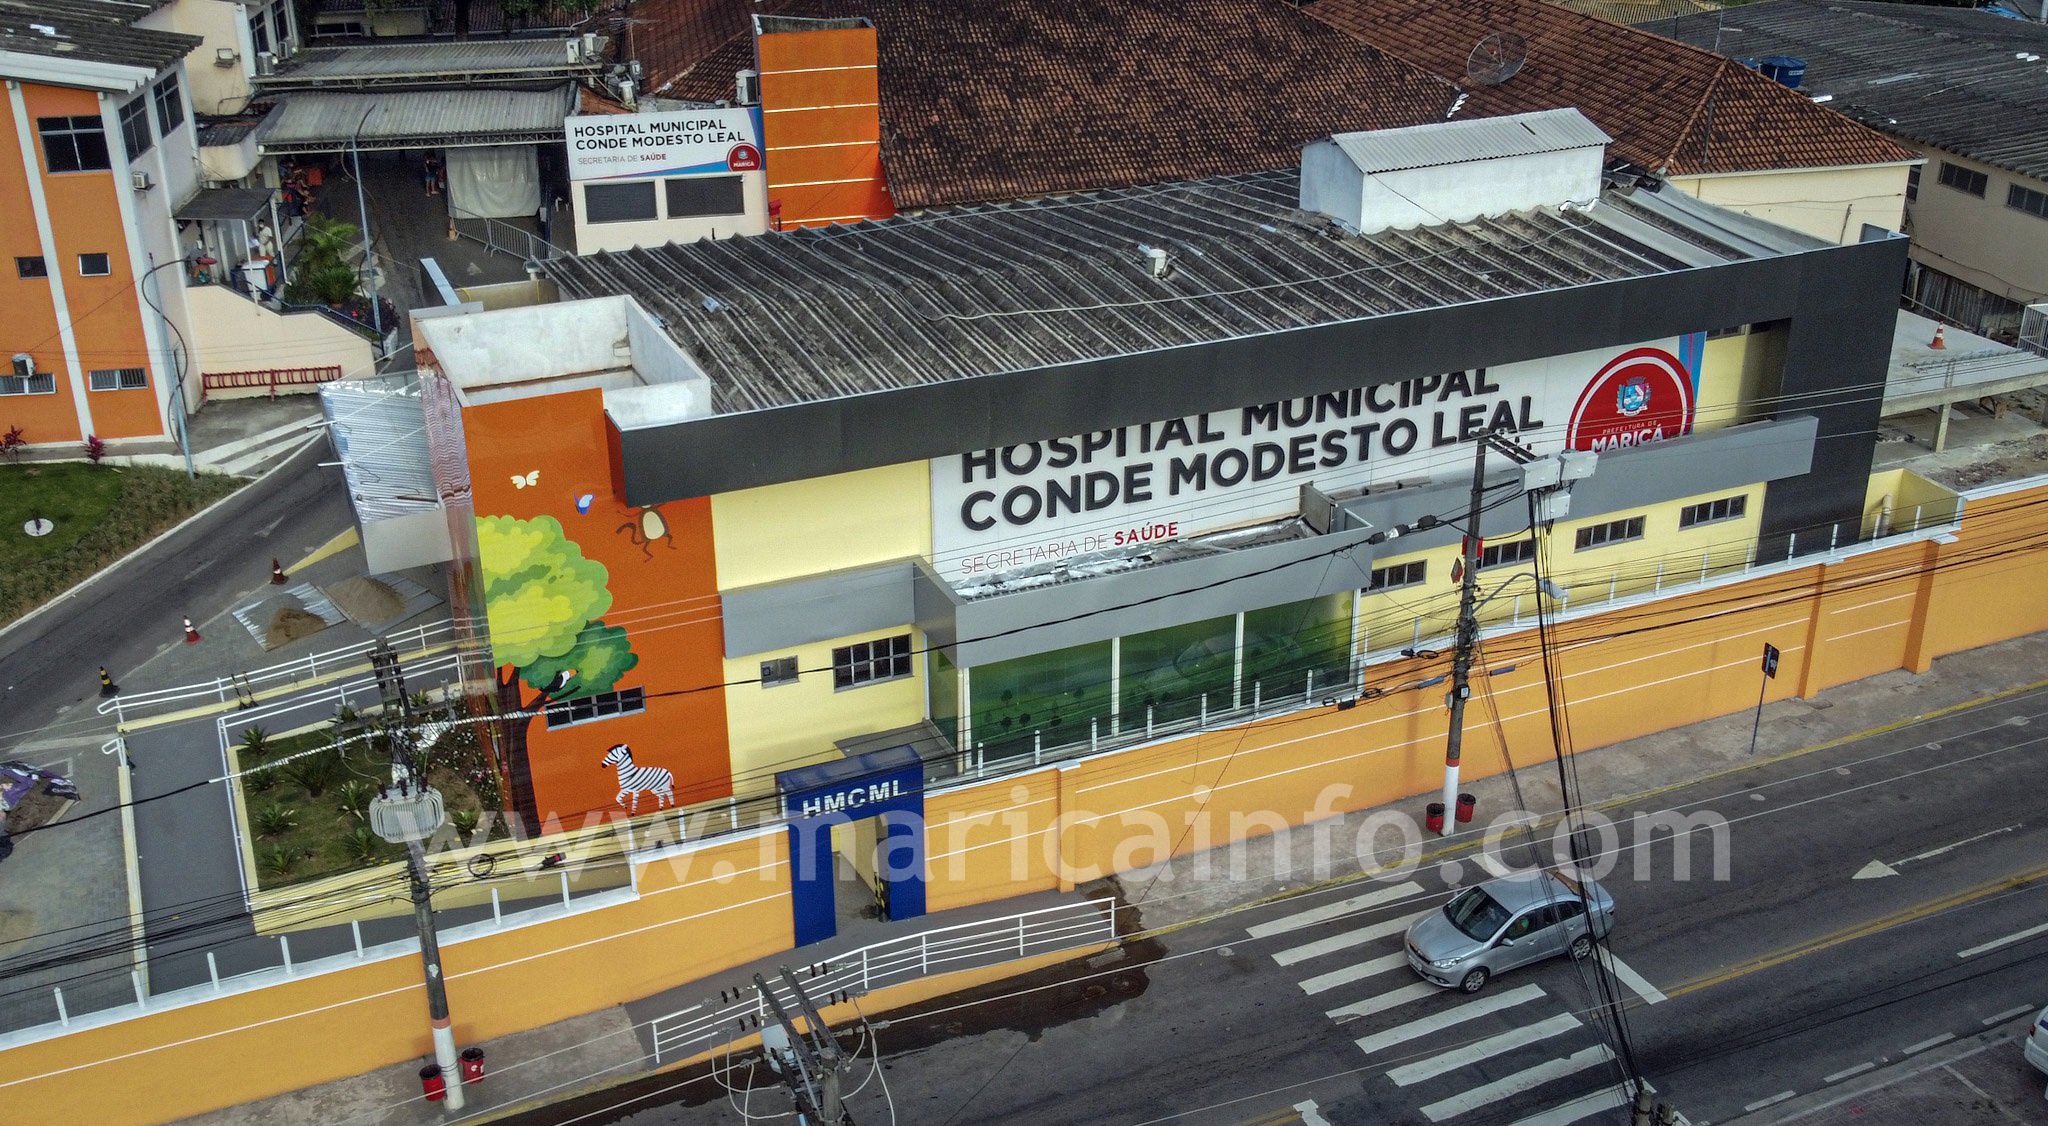 Marica Hospital Municipal Conde Modesto Leal